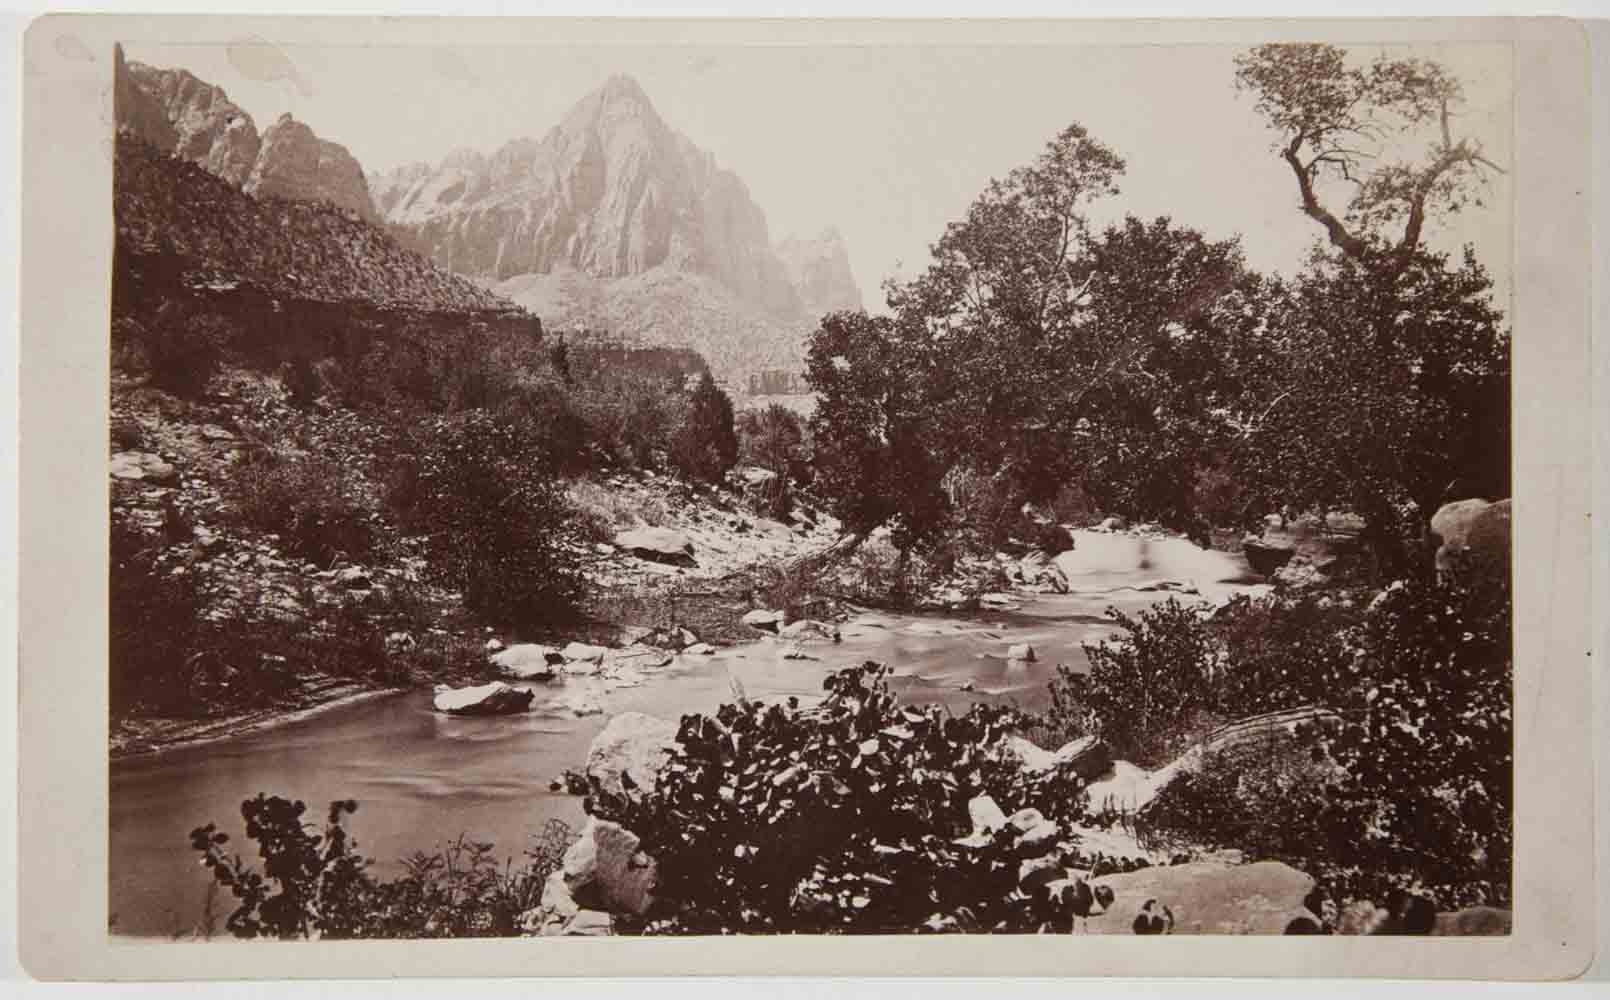 Ben Wittick (1845-1903) and John K. Hillers (1843-1925) - Zion's Peak, Rio Virgin, Utah, 1873